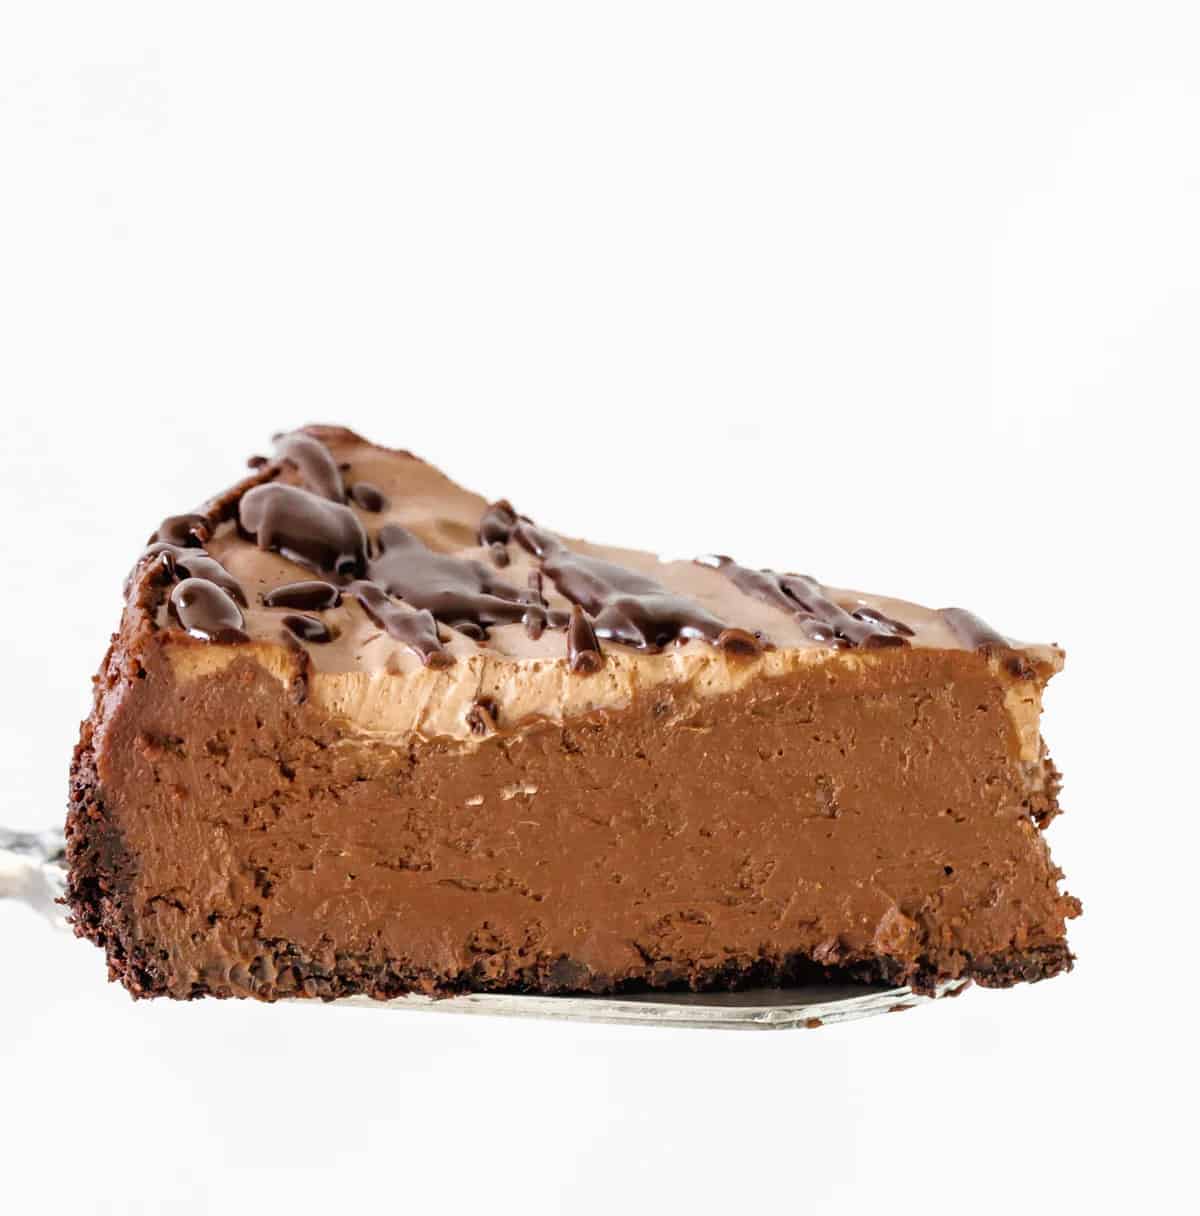 Single slice of chocolate cheesecake on cake server, white background.